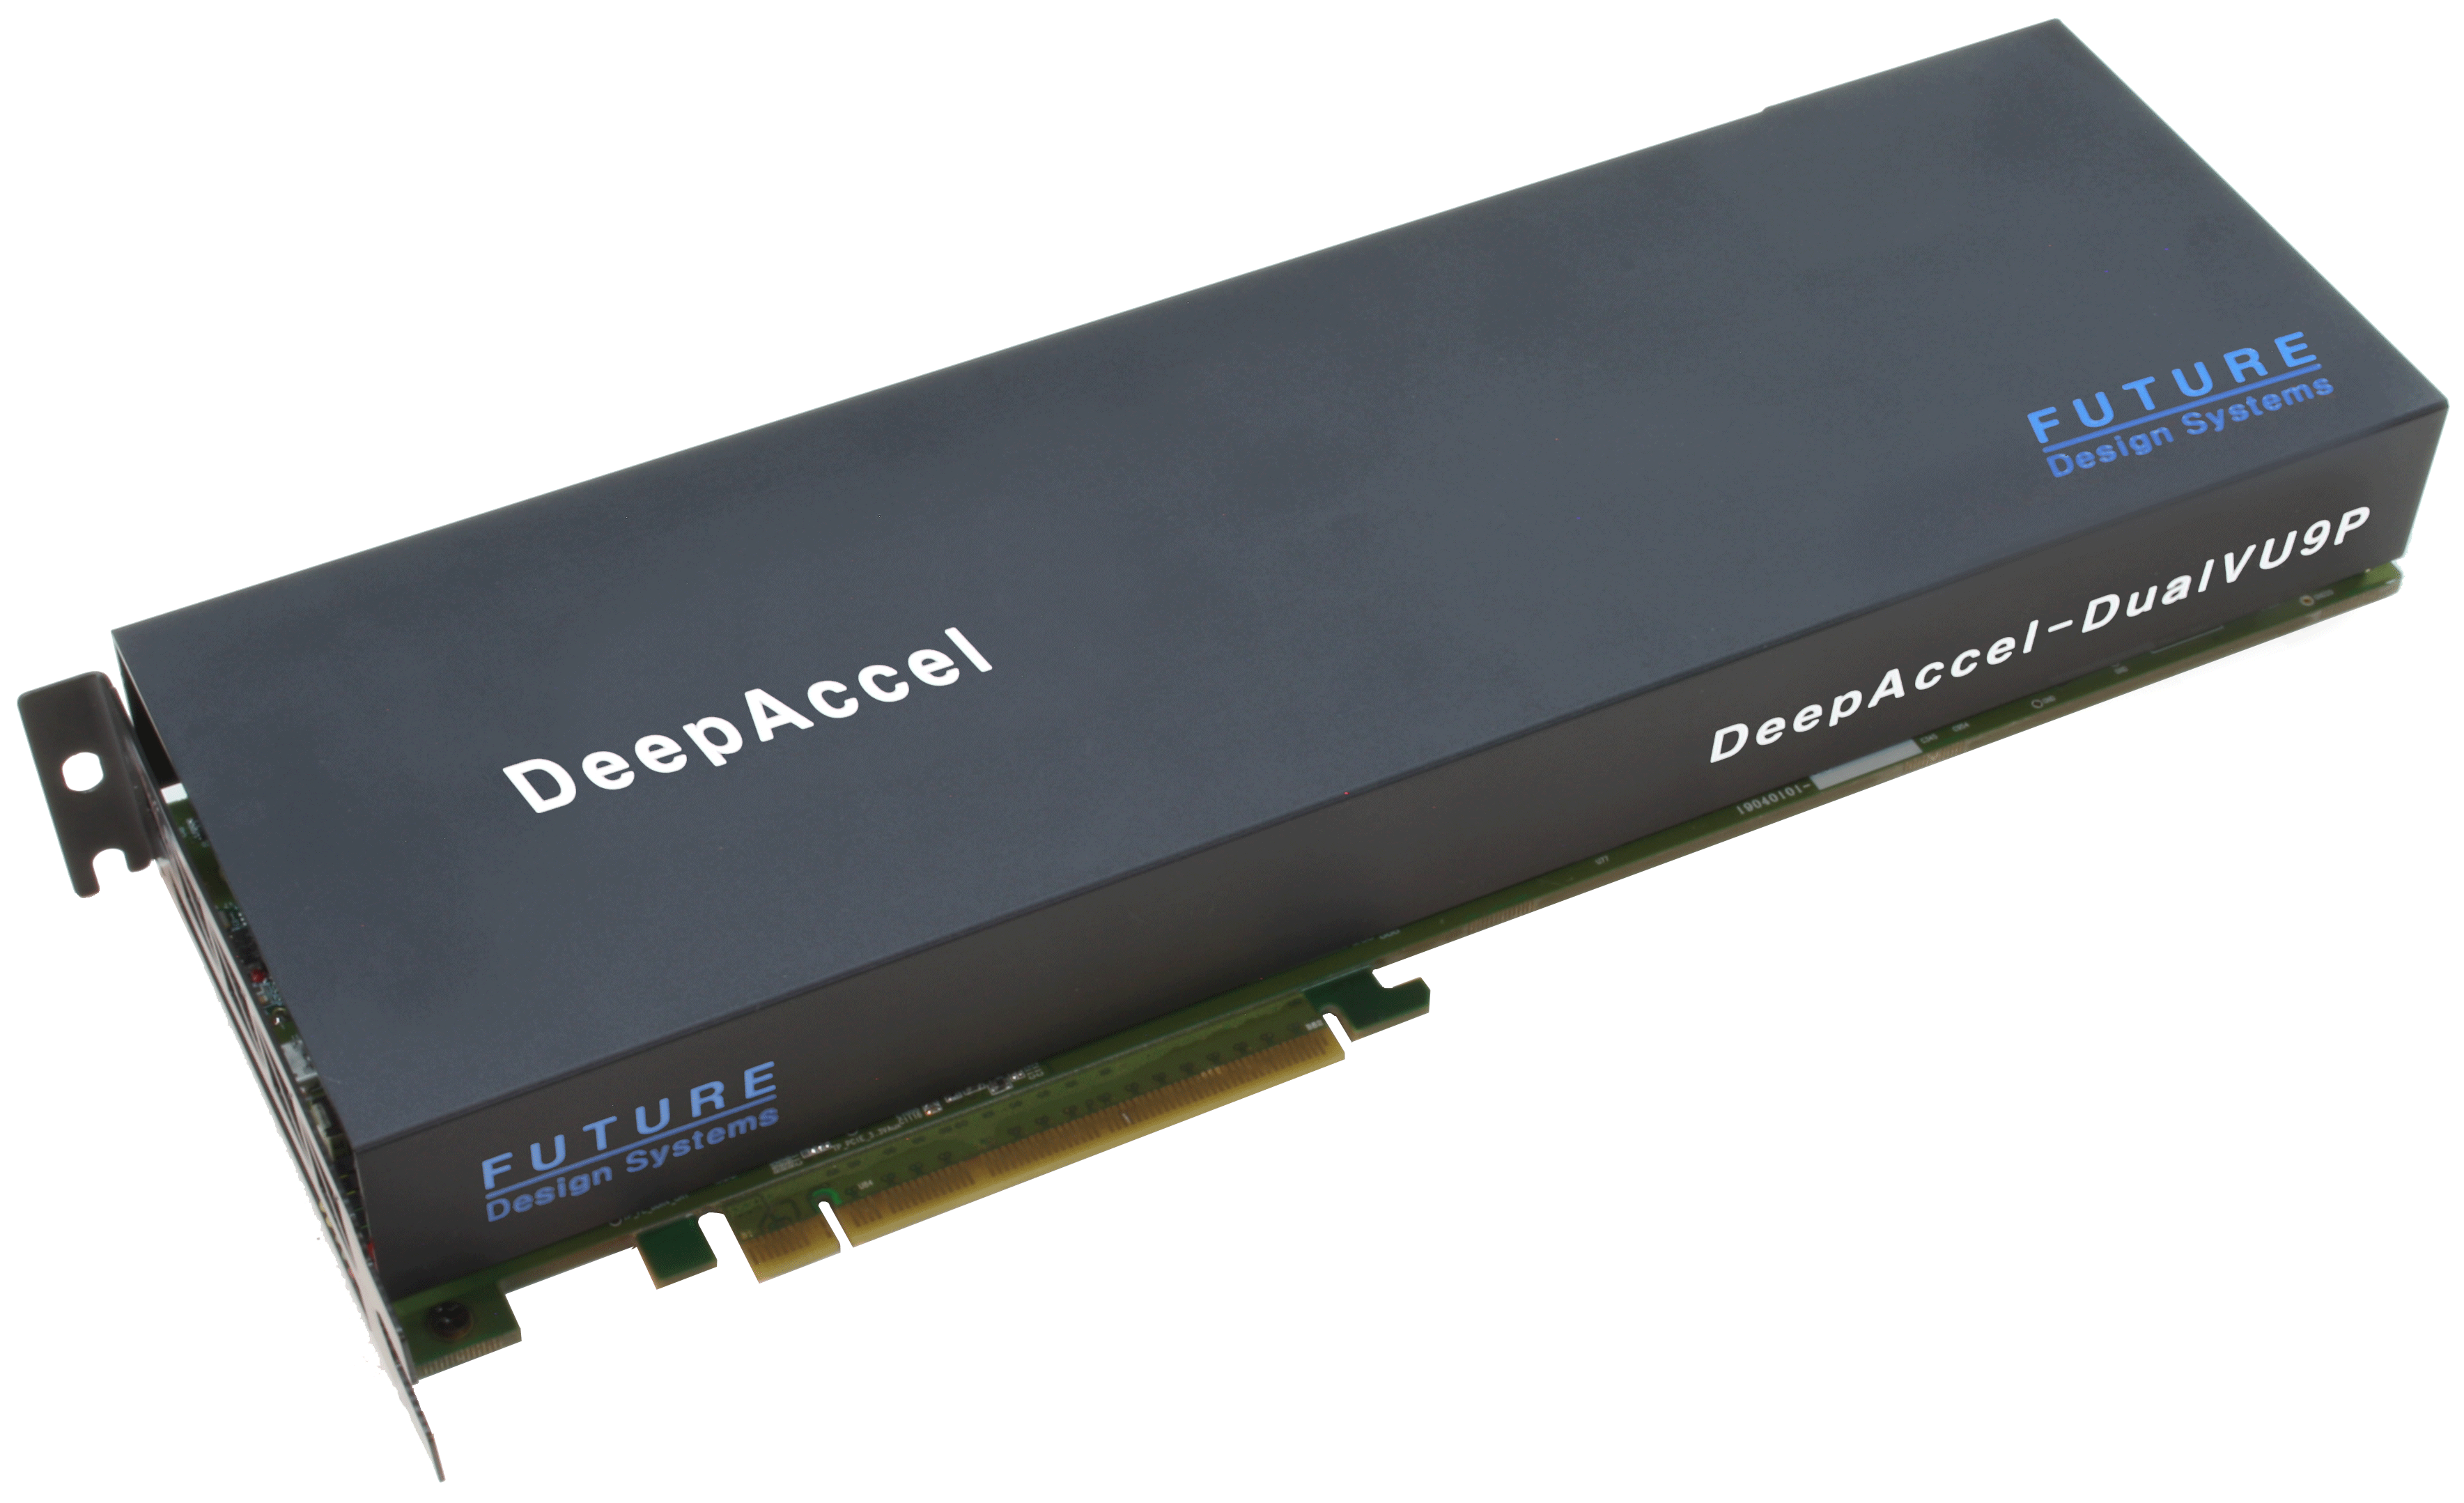 DeepAccel-DualVU9P-Passive